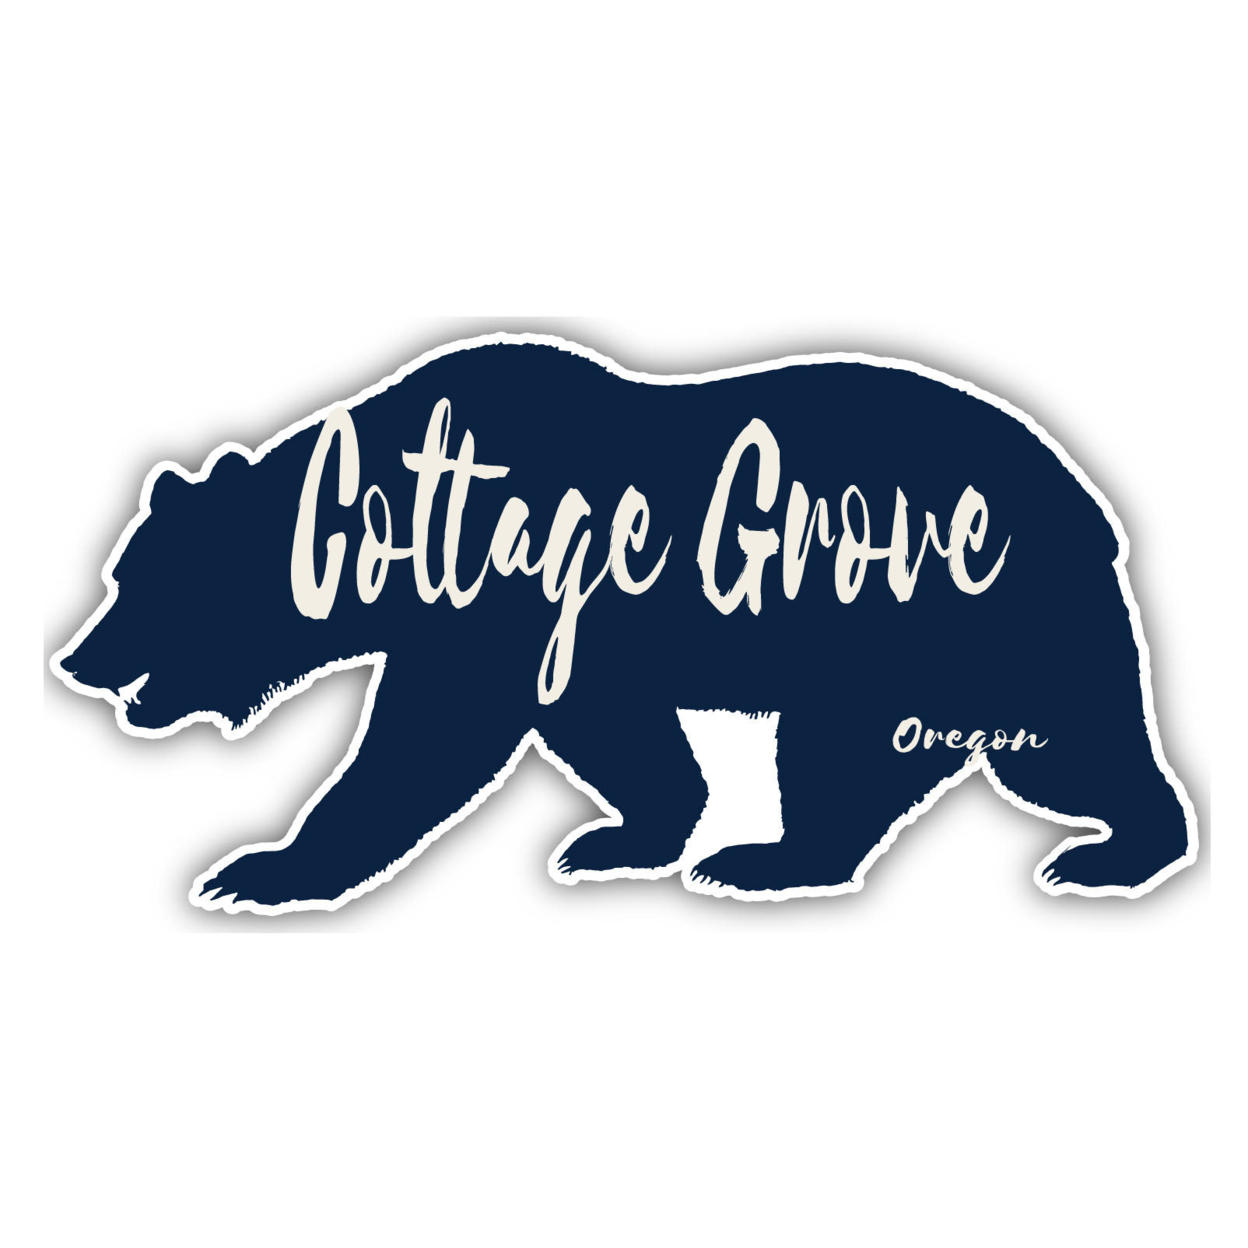 Cottage Grove Oregon Souvenir Decorative Stickers (Choose Theme And Size) - Single Unit, 8-Inch, Bear